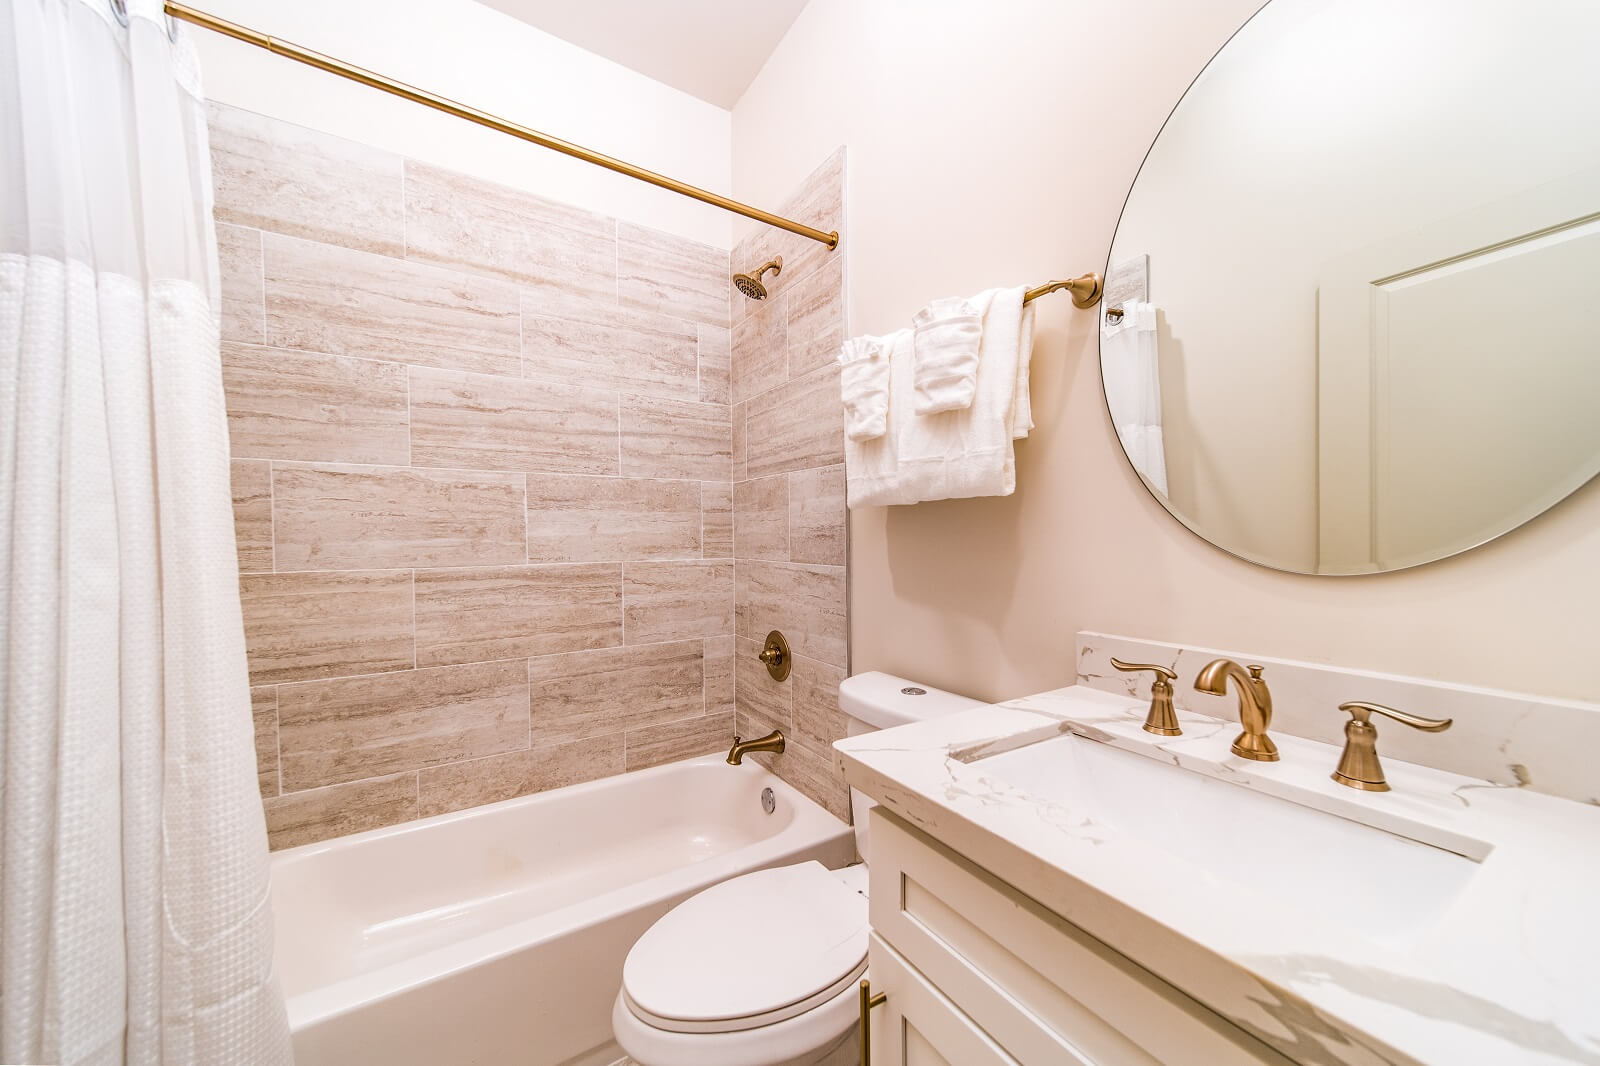 The Alexandre Unit 202 bathroom, a New Orleans luxury rental.